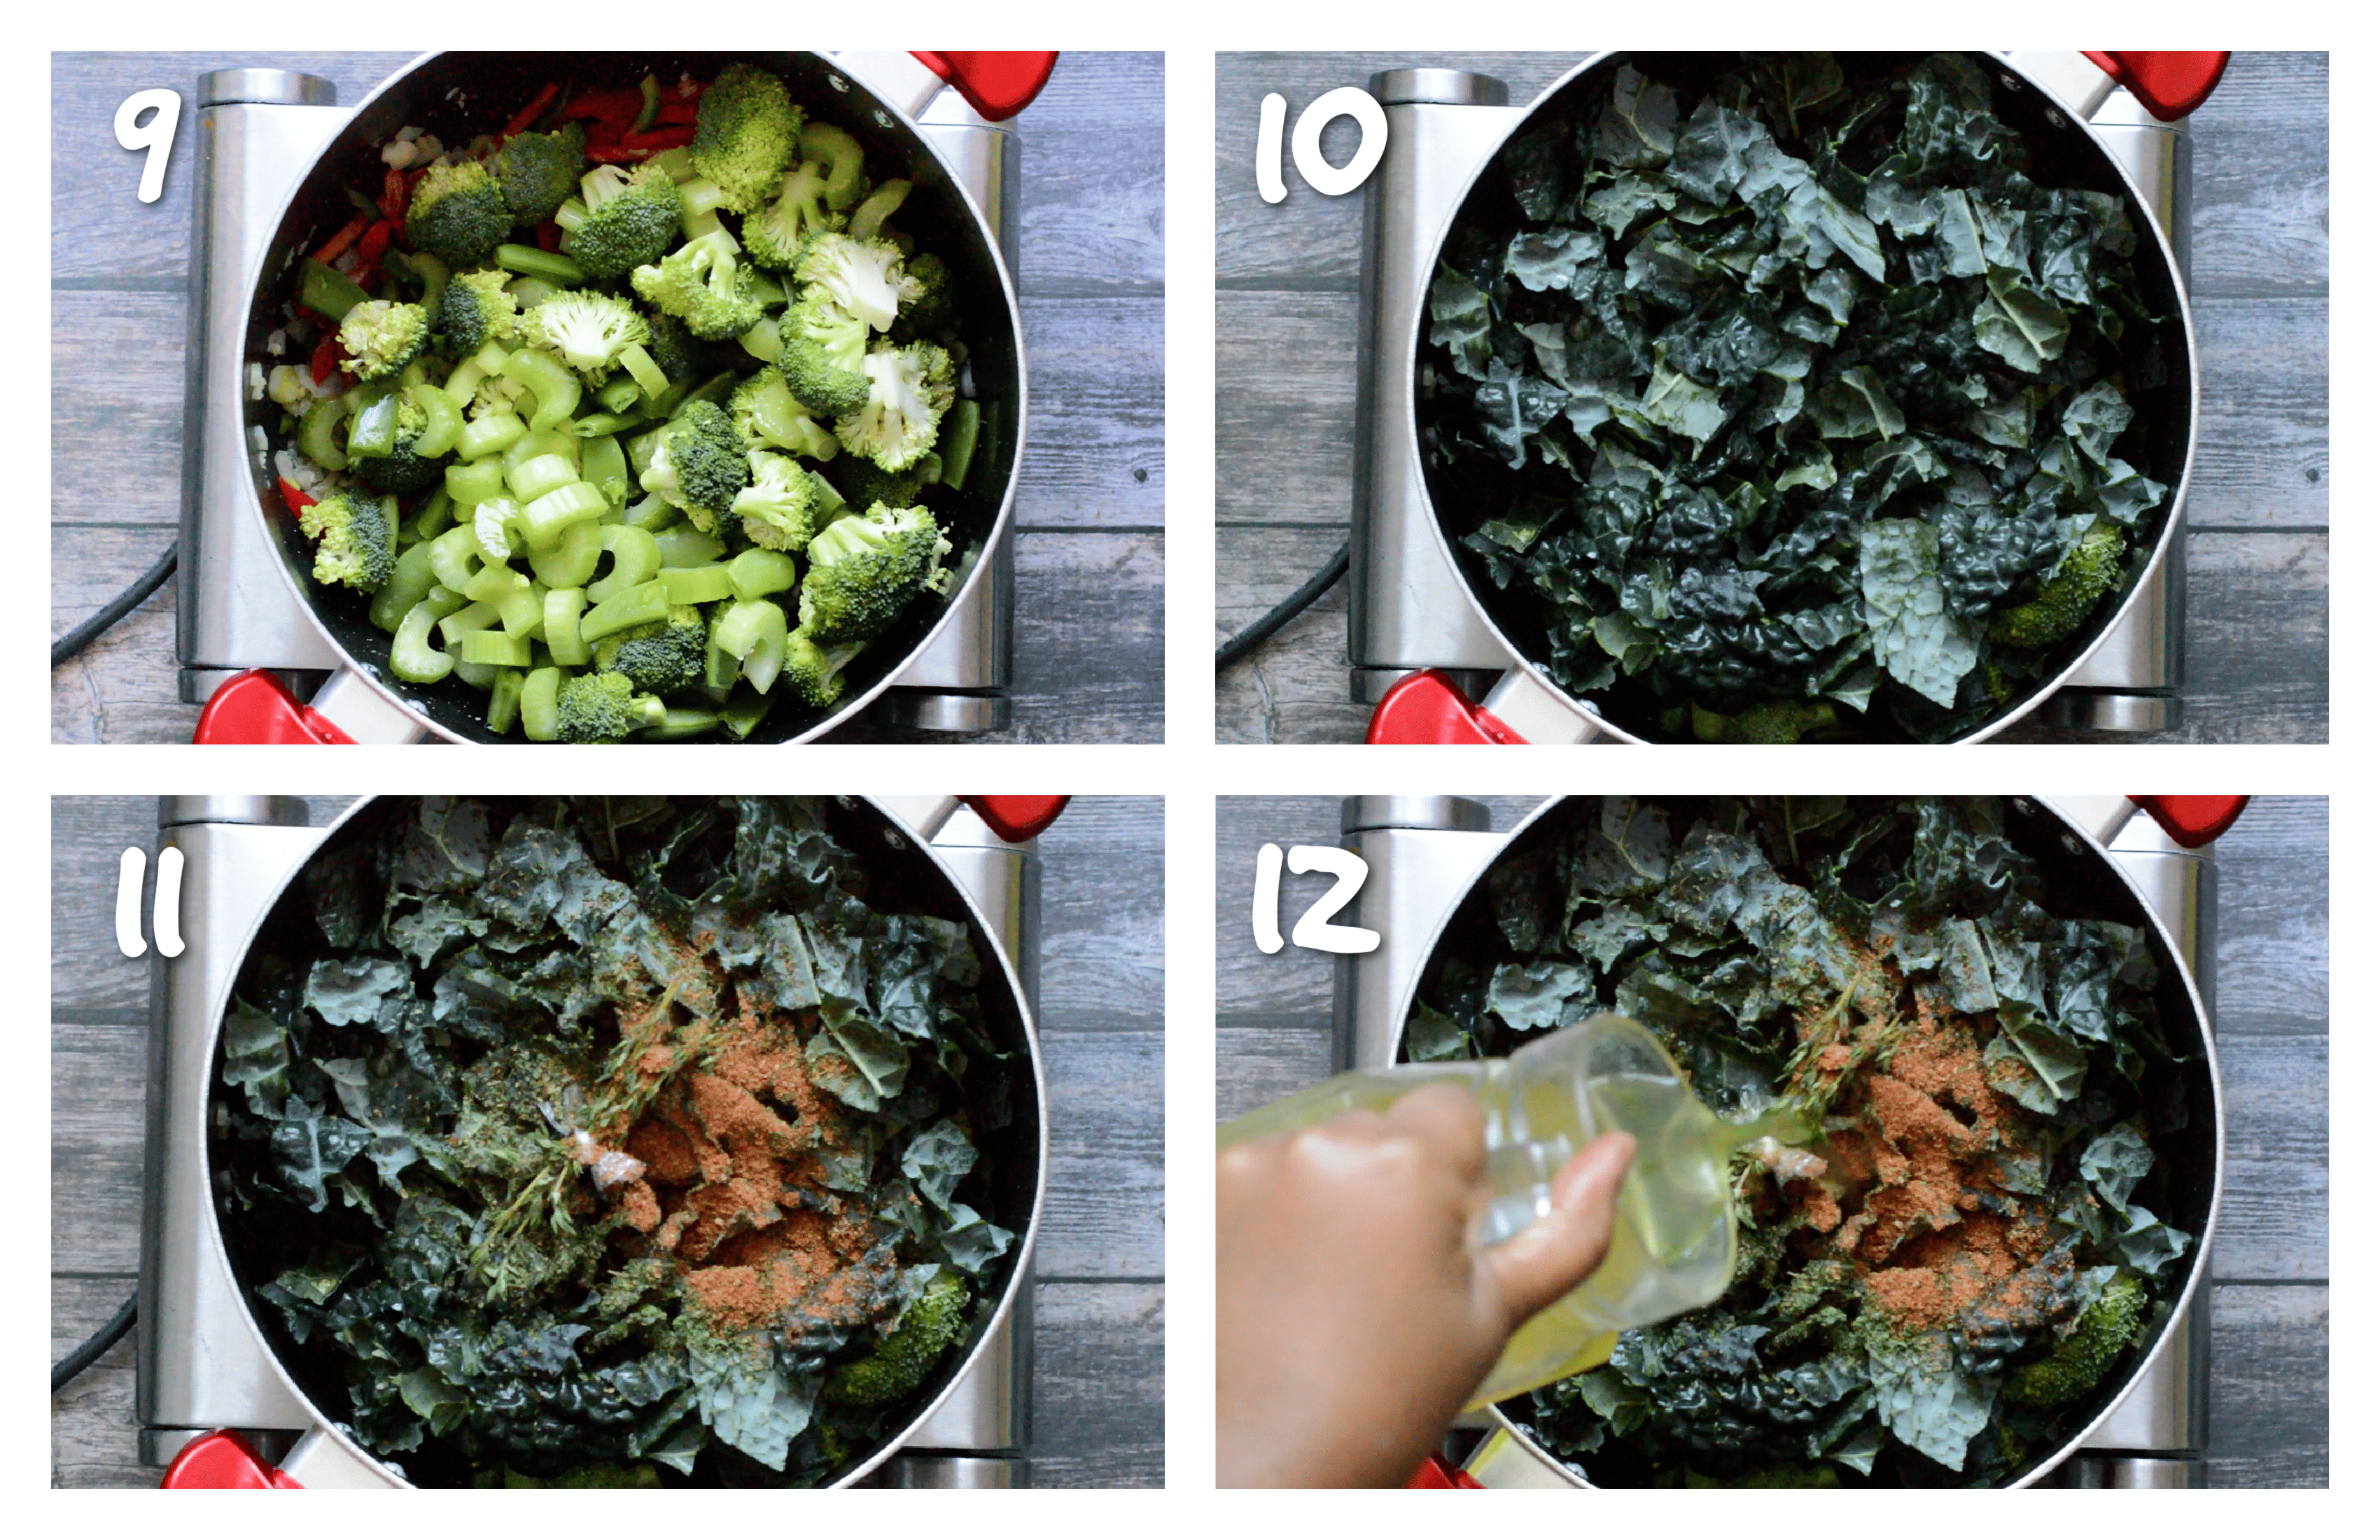 Steps 9-12 adding the vegetables